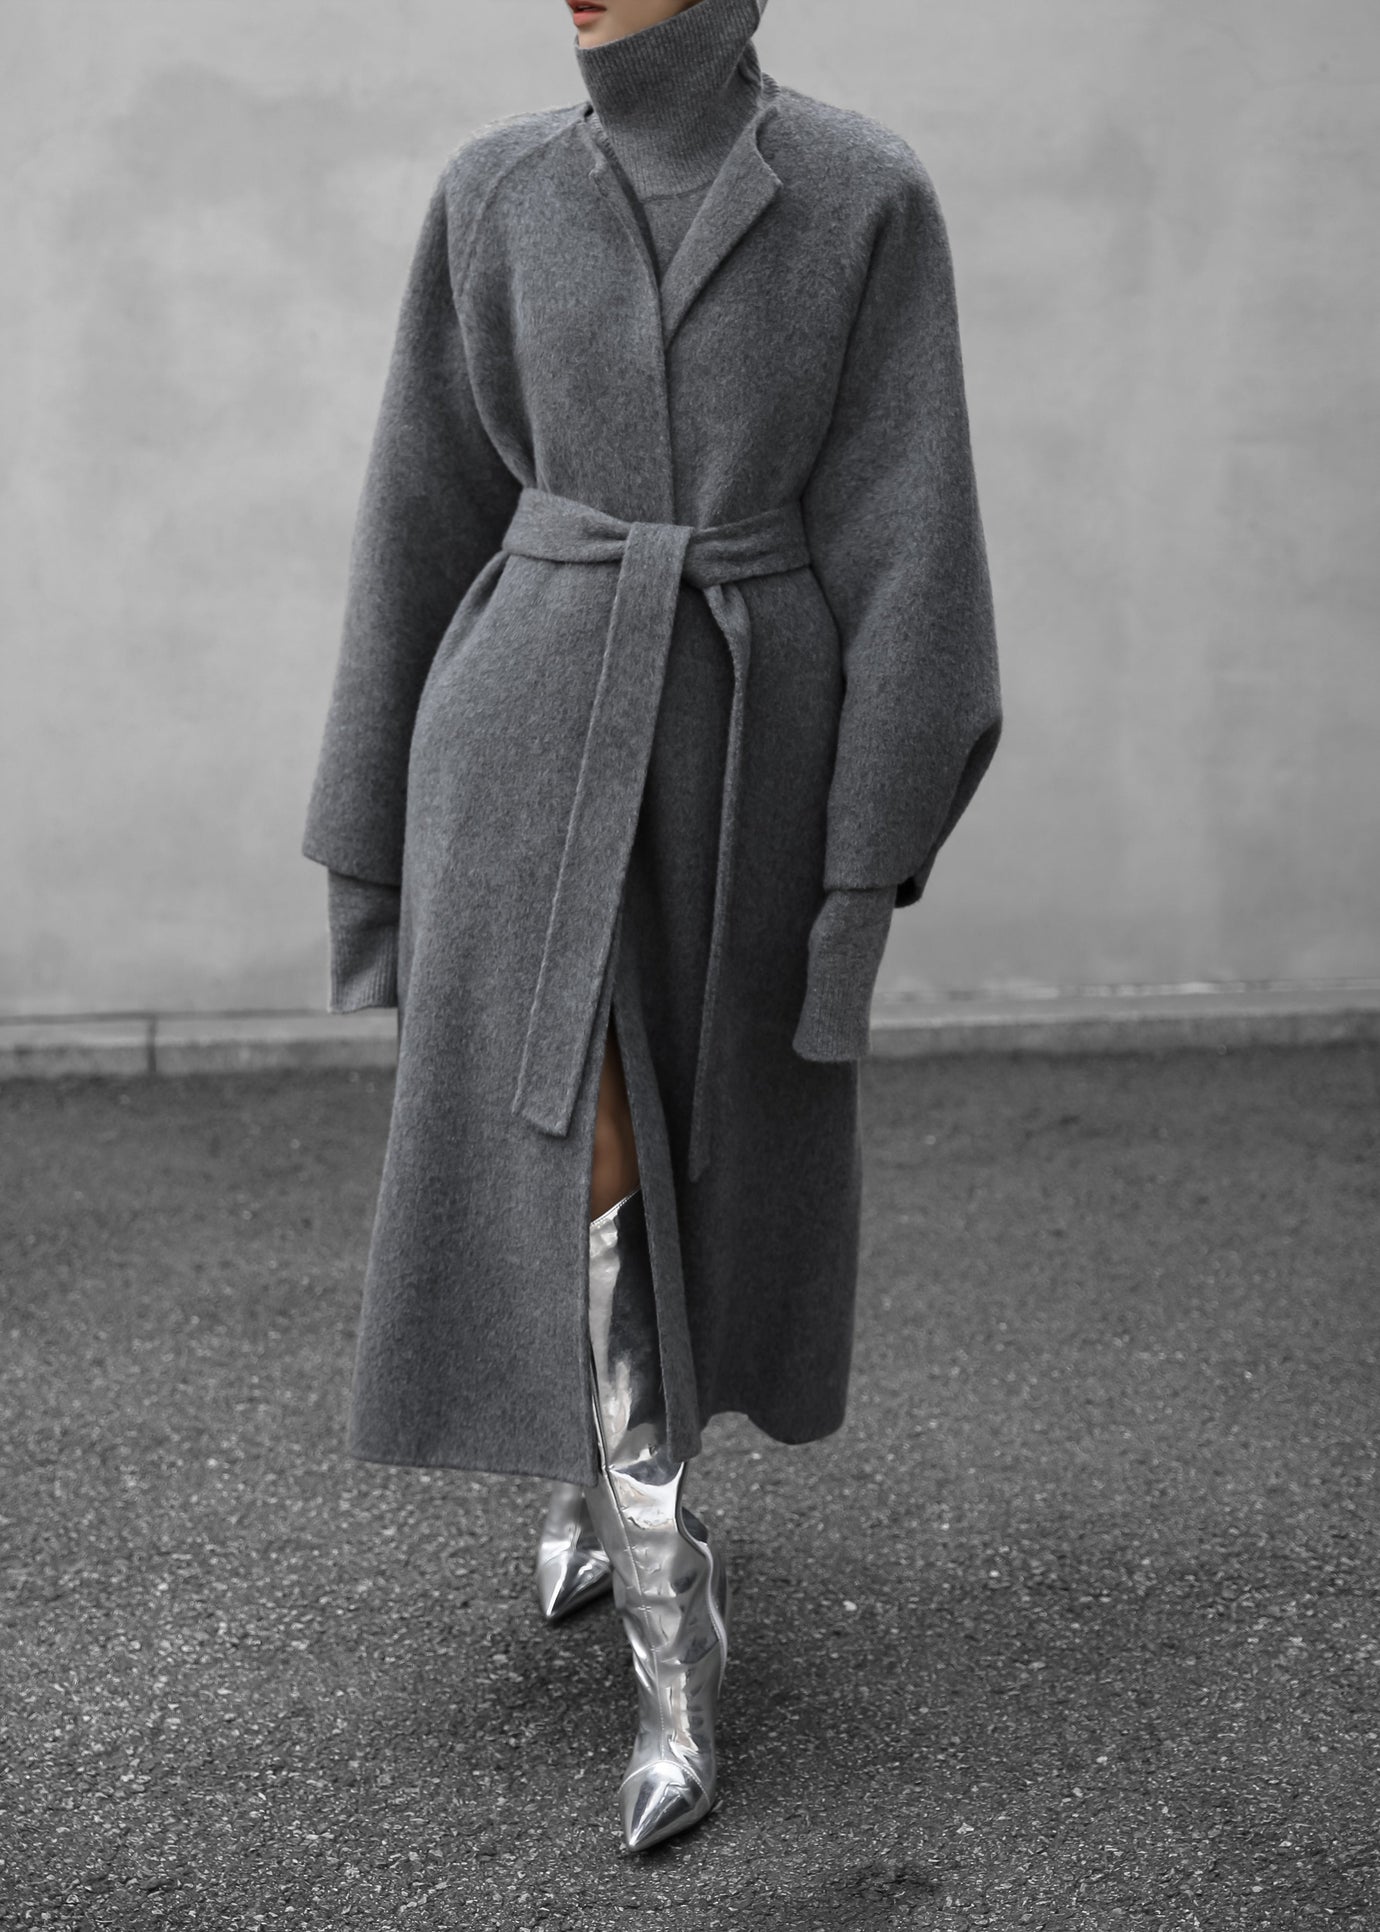 Leon Wool Coat - Grey